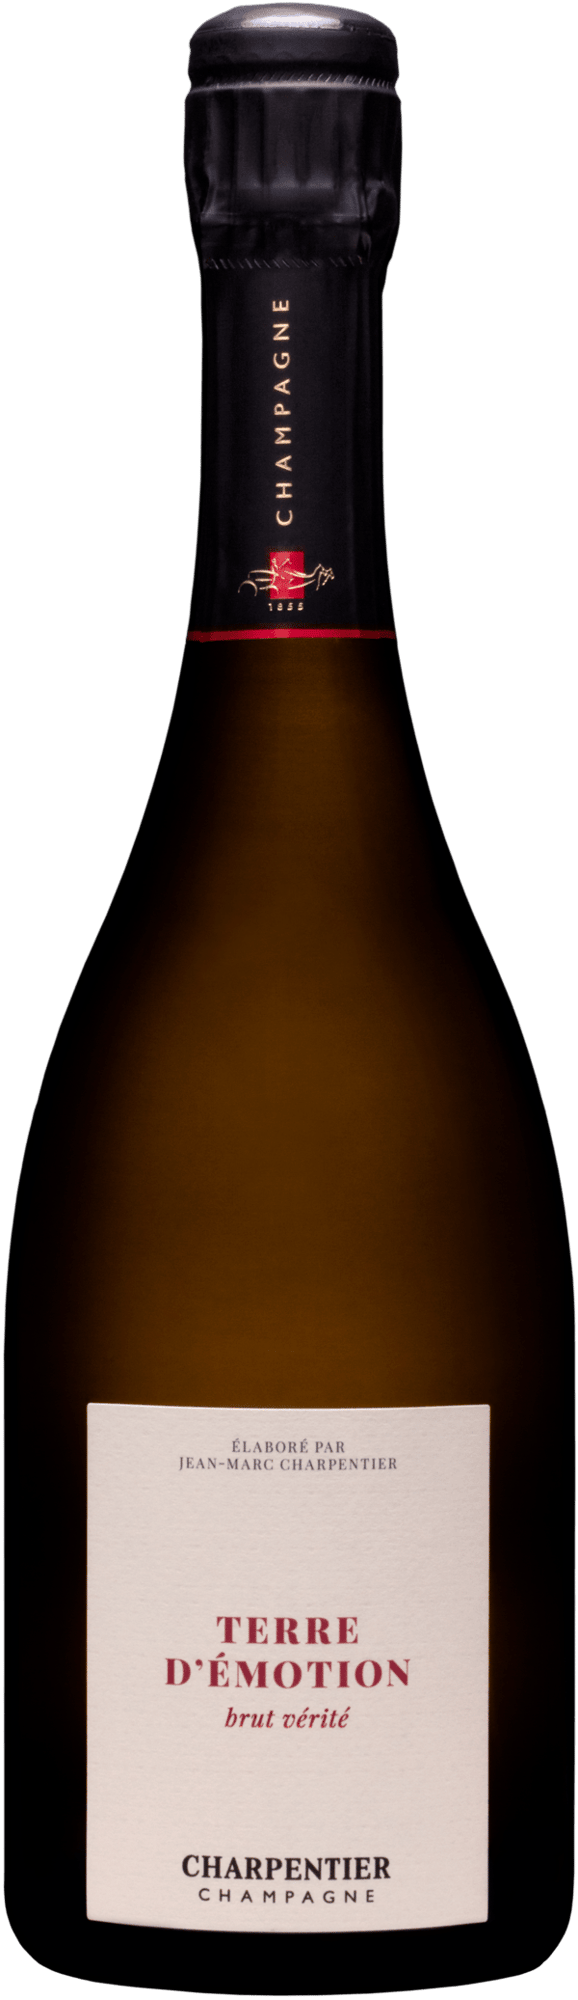 Champagne Charpentier Terre d'Émotion brut Vérité